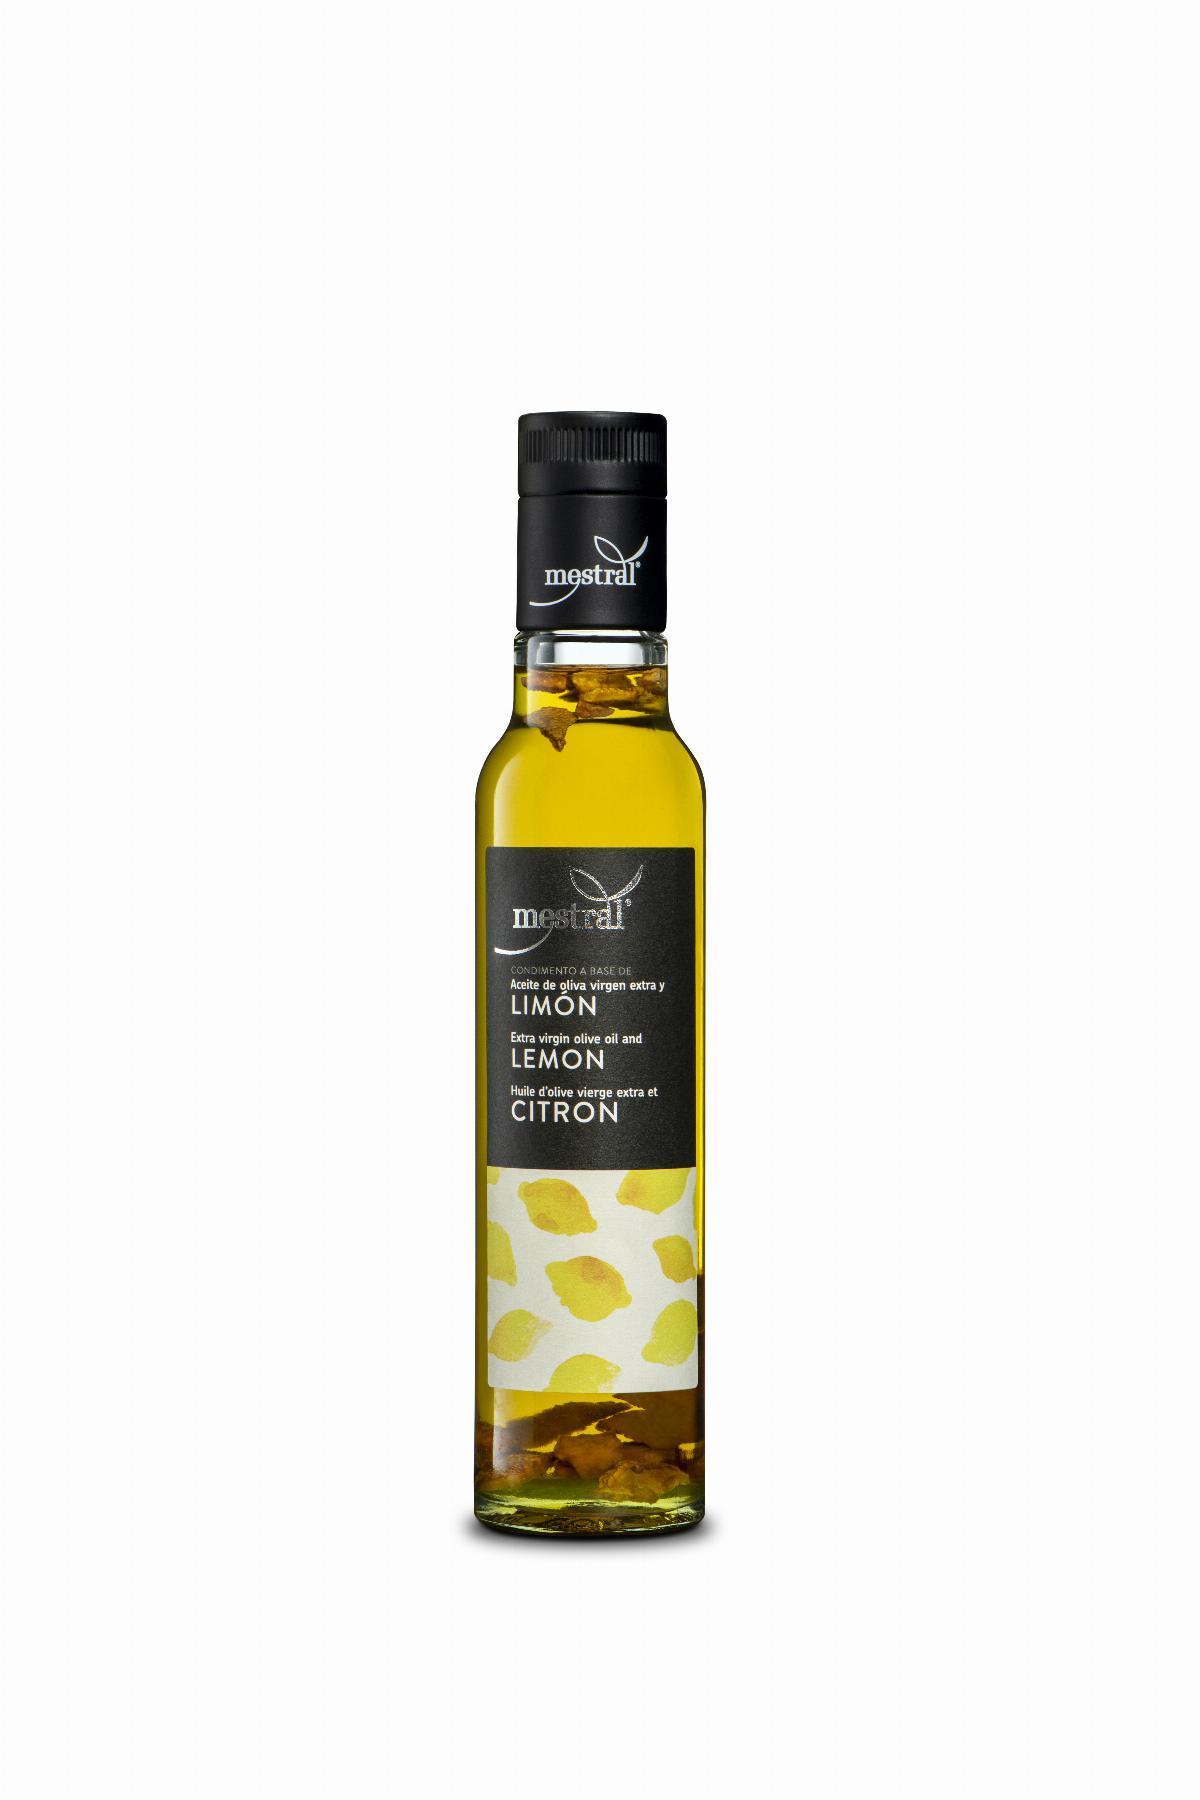 Huile d'olive et Condiments - Oli d'Oliva Verge Extra Mestral amb Llimona, ampolla Dòrica transparent, 250ml, ES-EN-FR - Mestral Cambrils